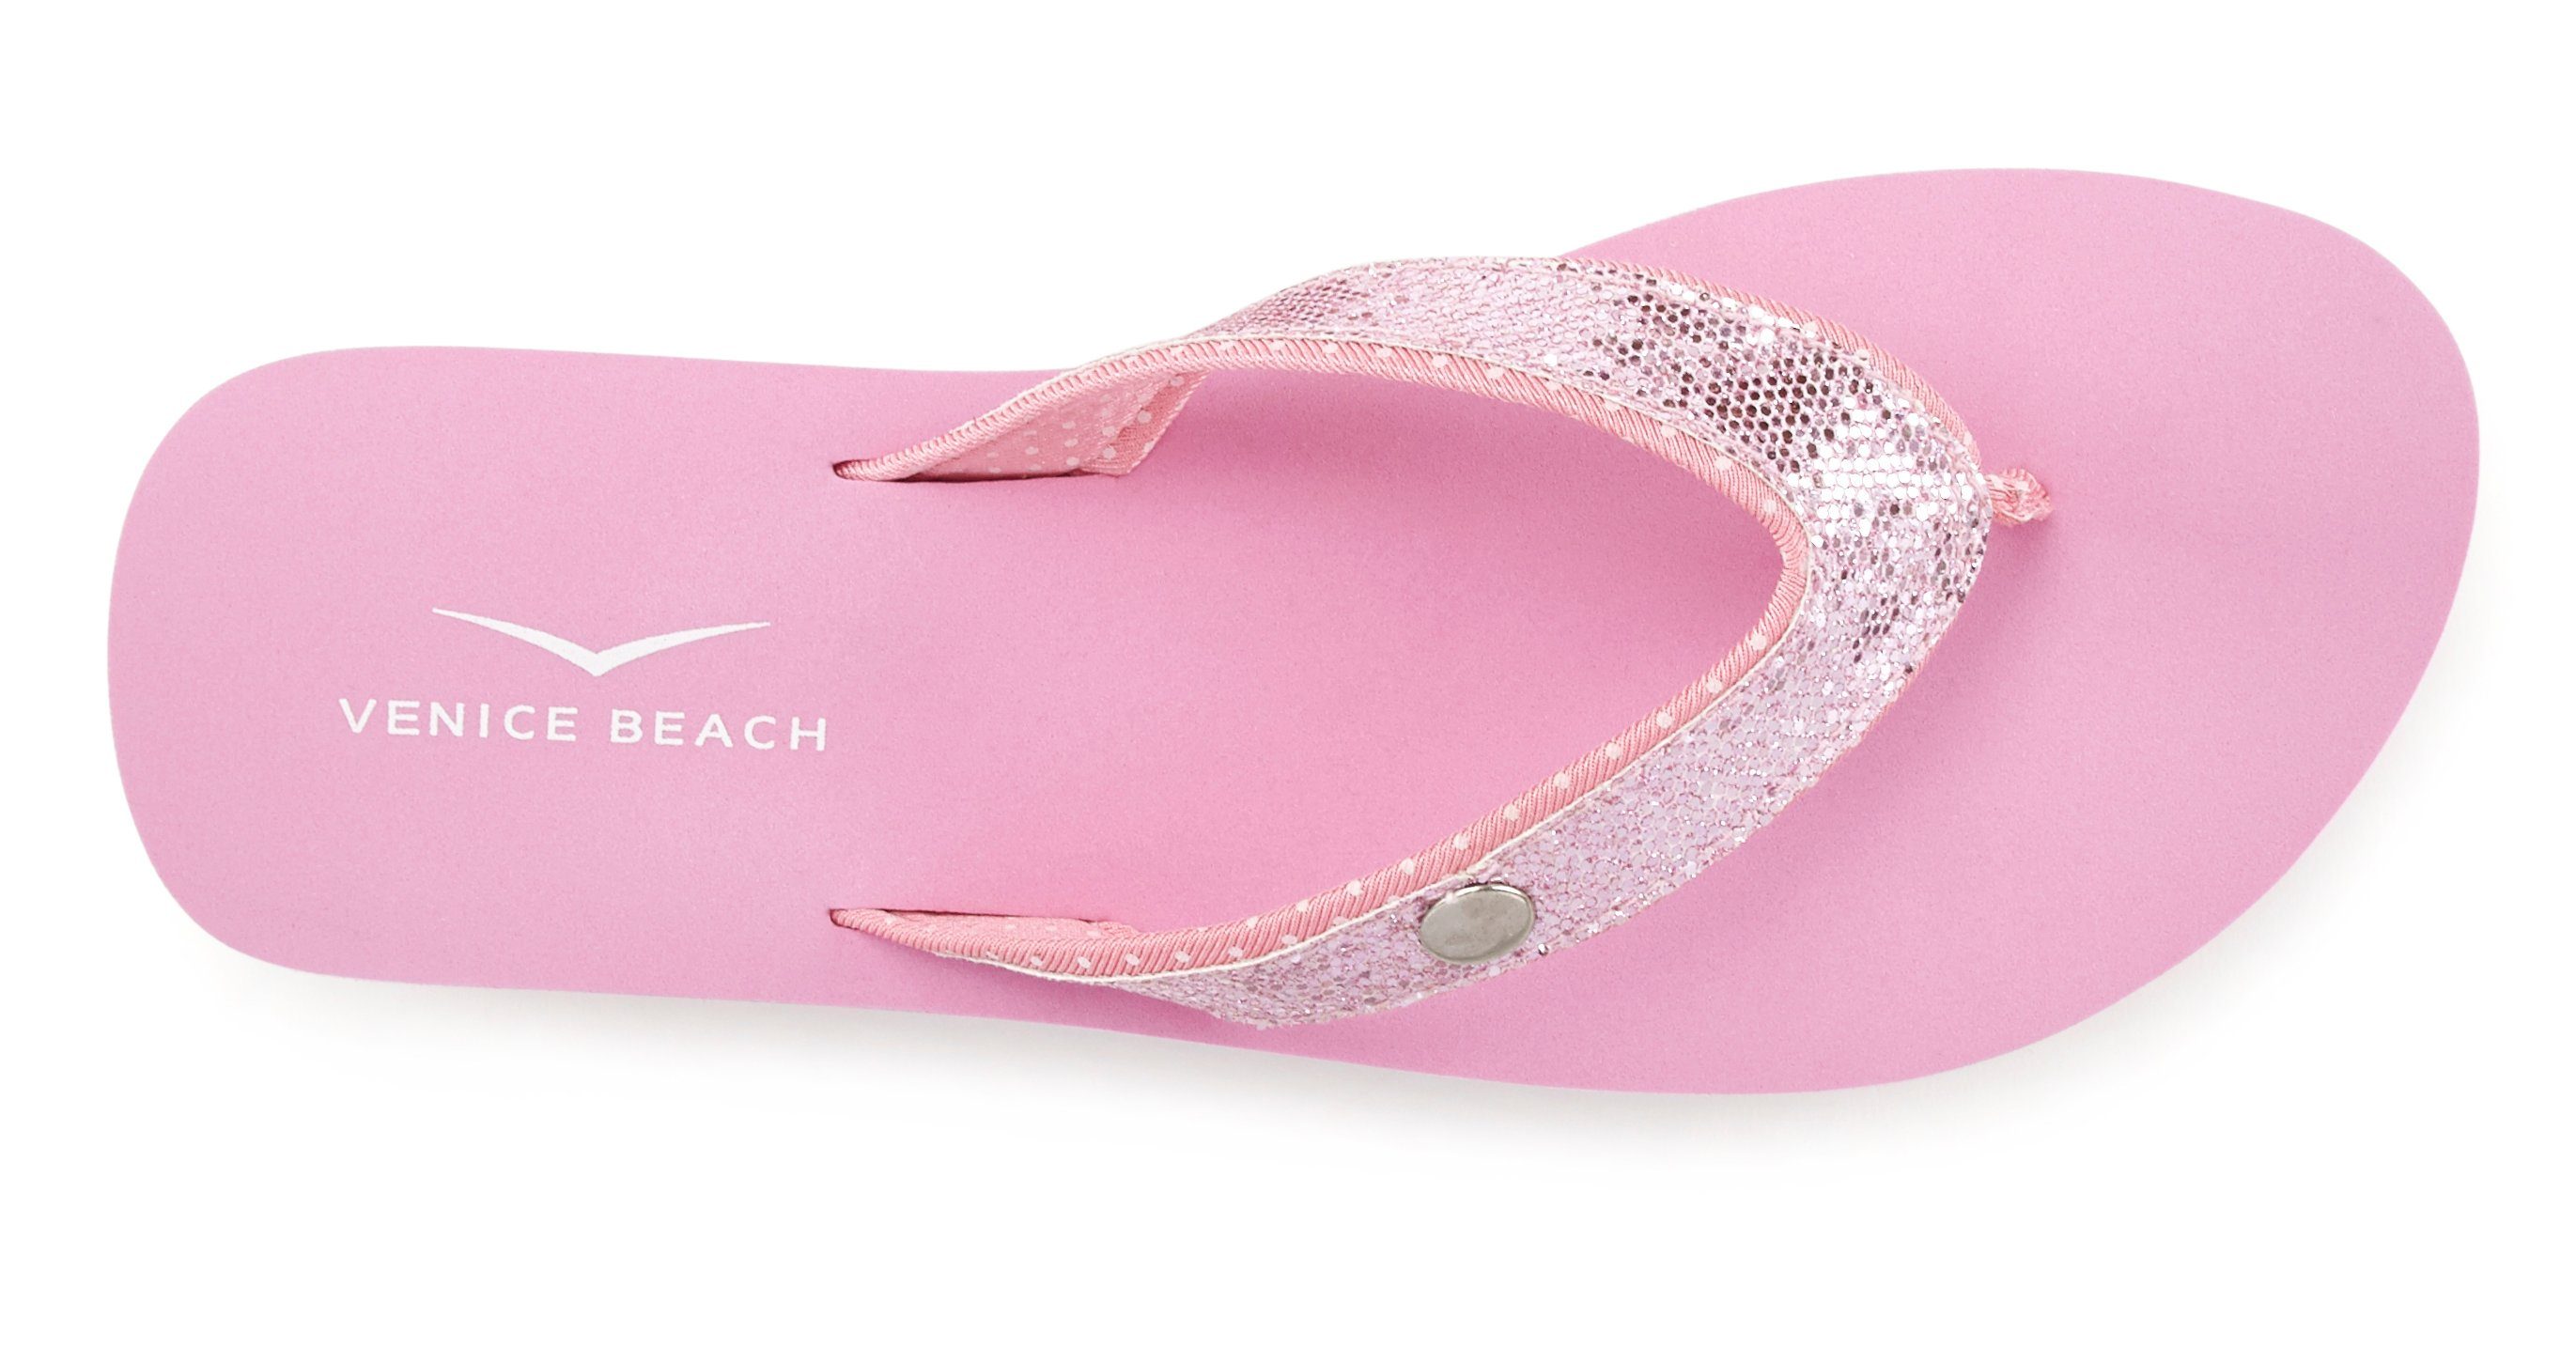 Venice Beach Badezehentrenner Sandale, Pantolette, ultraleicht rosé Badeschuh VEGAN Glitzerband mit